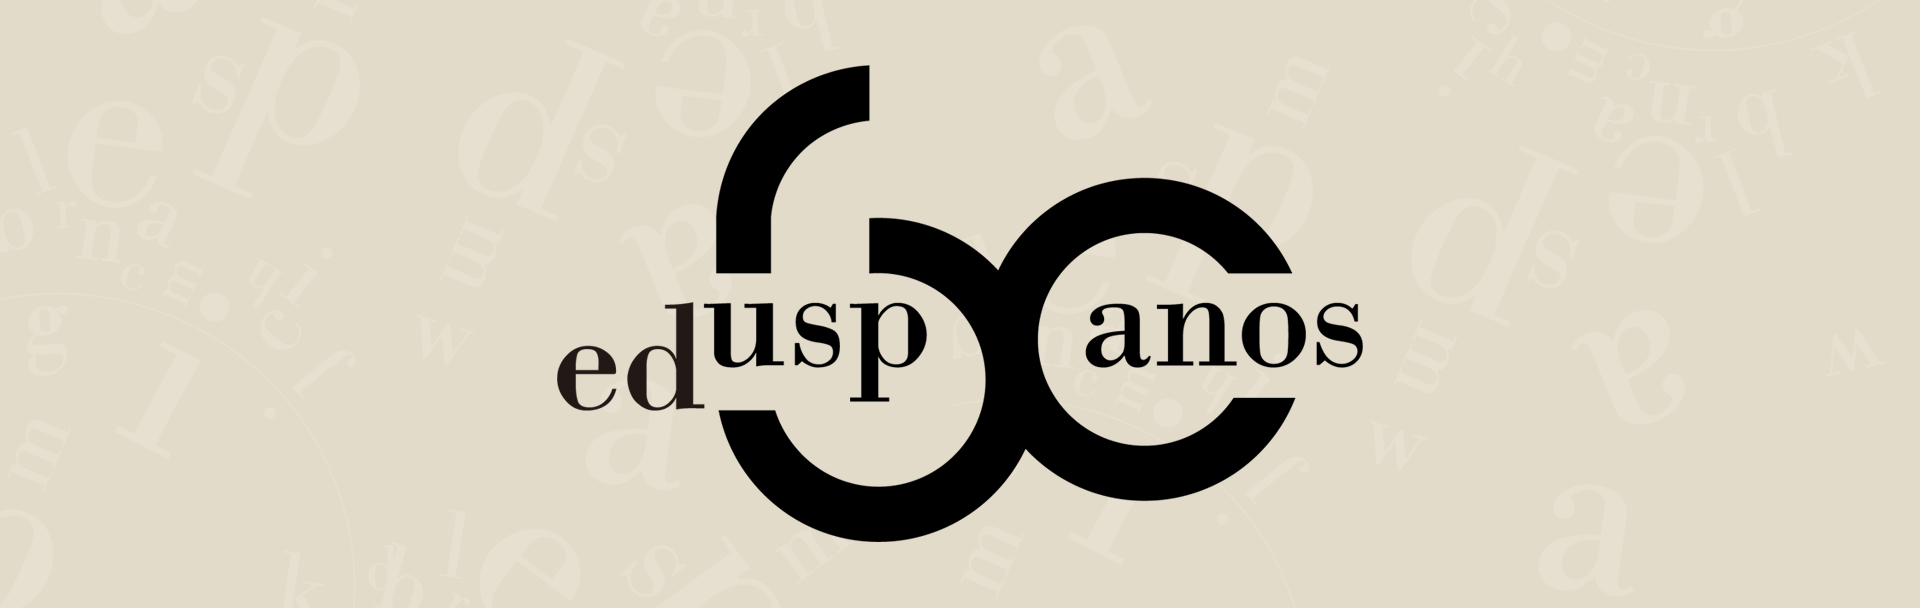 EDUSP 60 anos